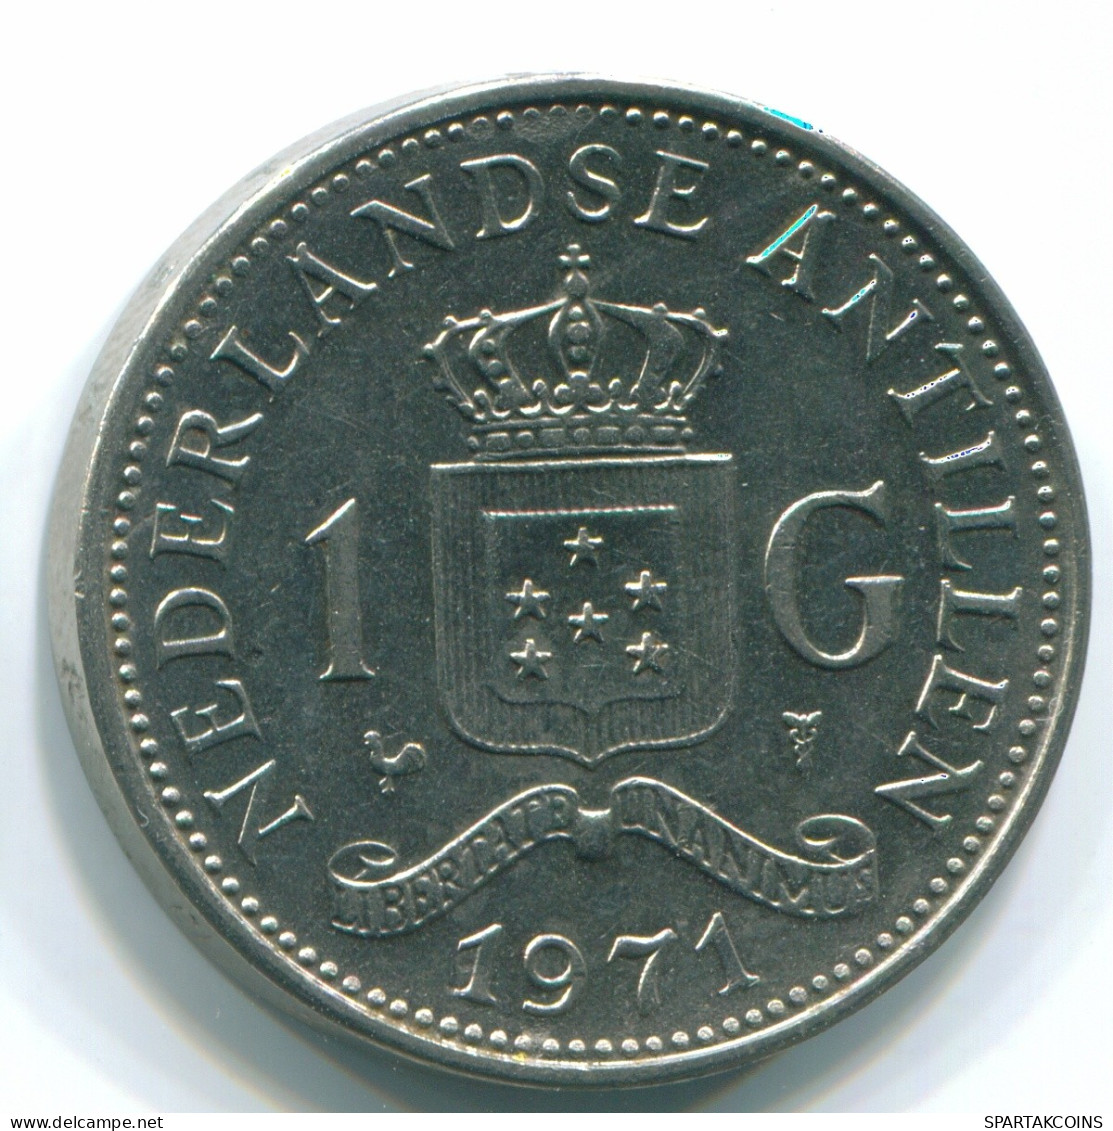 1 GULDEN 1971 NETHERLANDS ANTILLES Nickel Colonial Coin #S11968.U.A - Antilles Néerlandaises